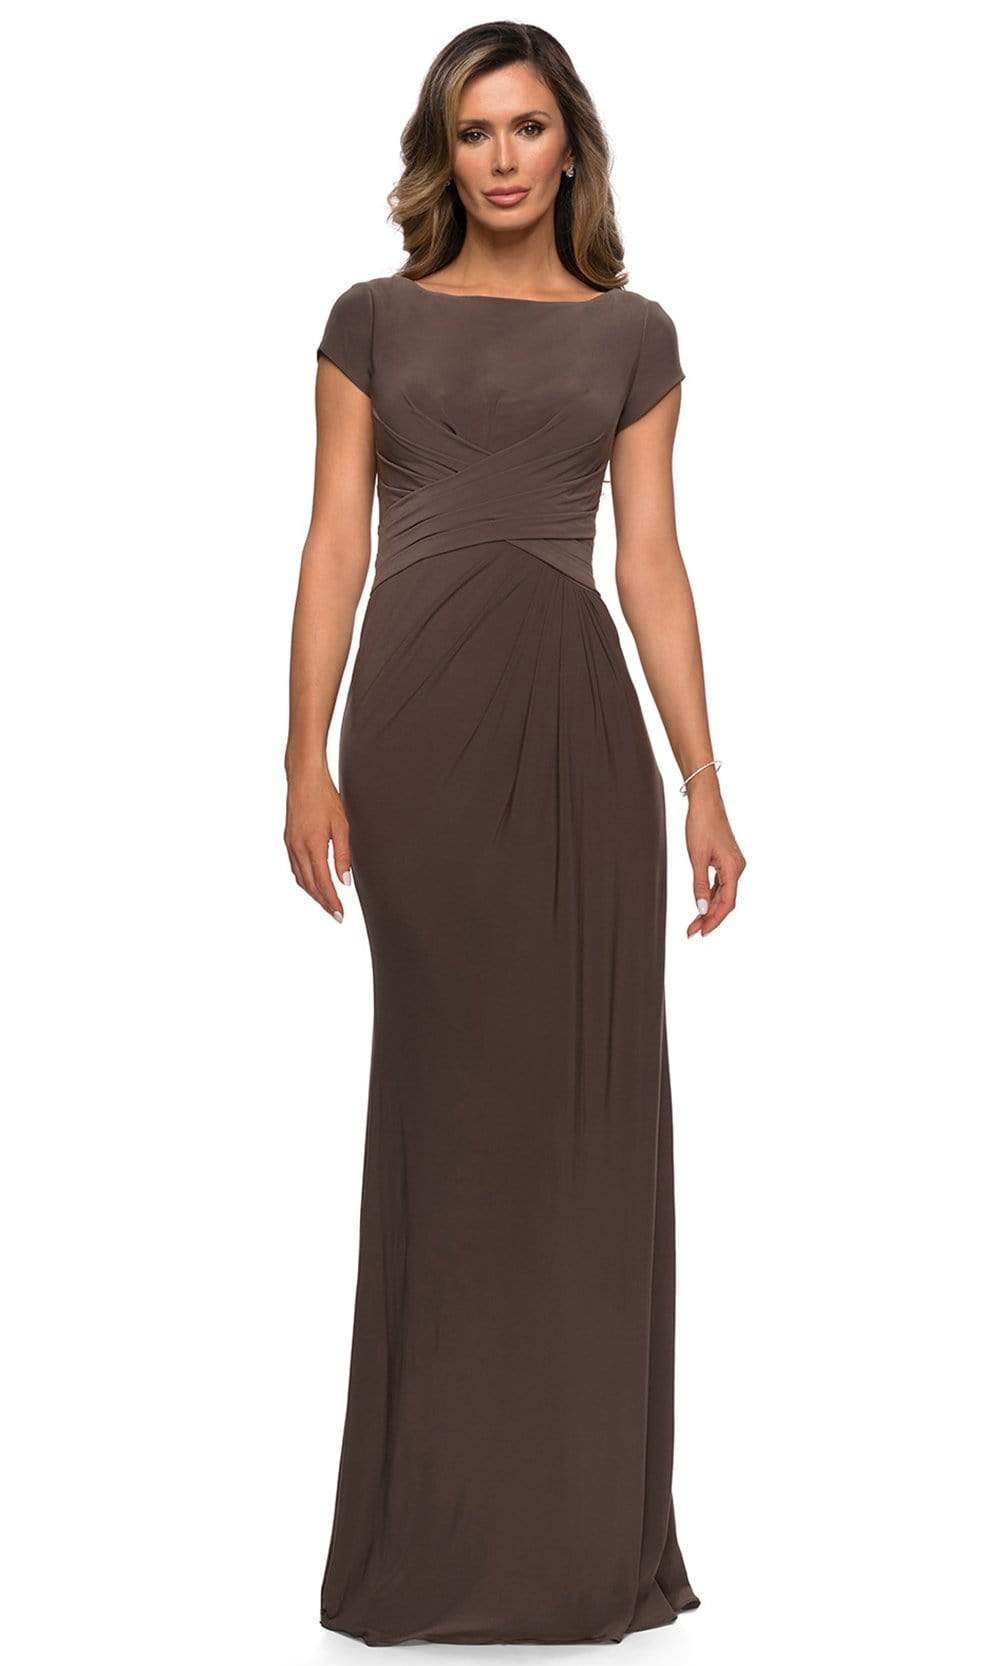 Image of La Femme - 28026 Bateau Neck Cap Sleeve Sleek Jersey Long Dress